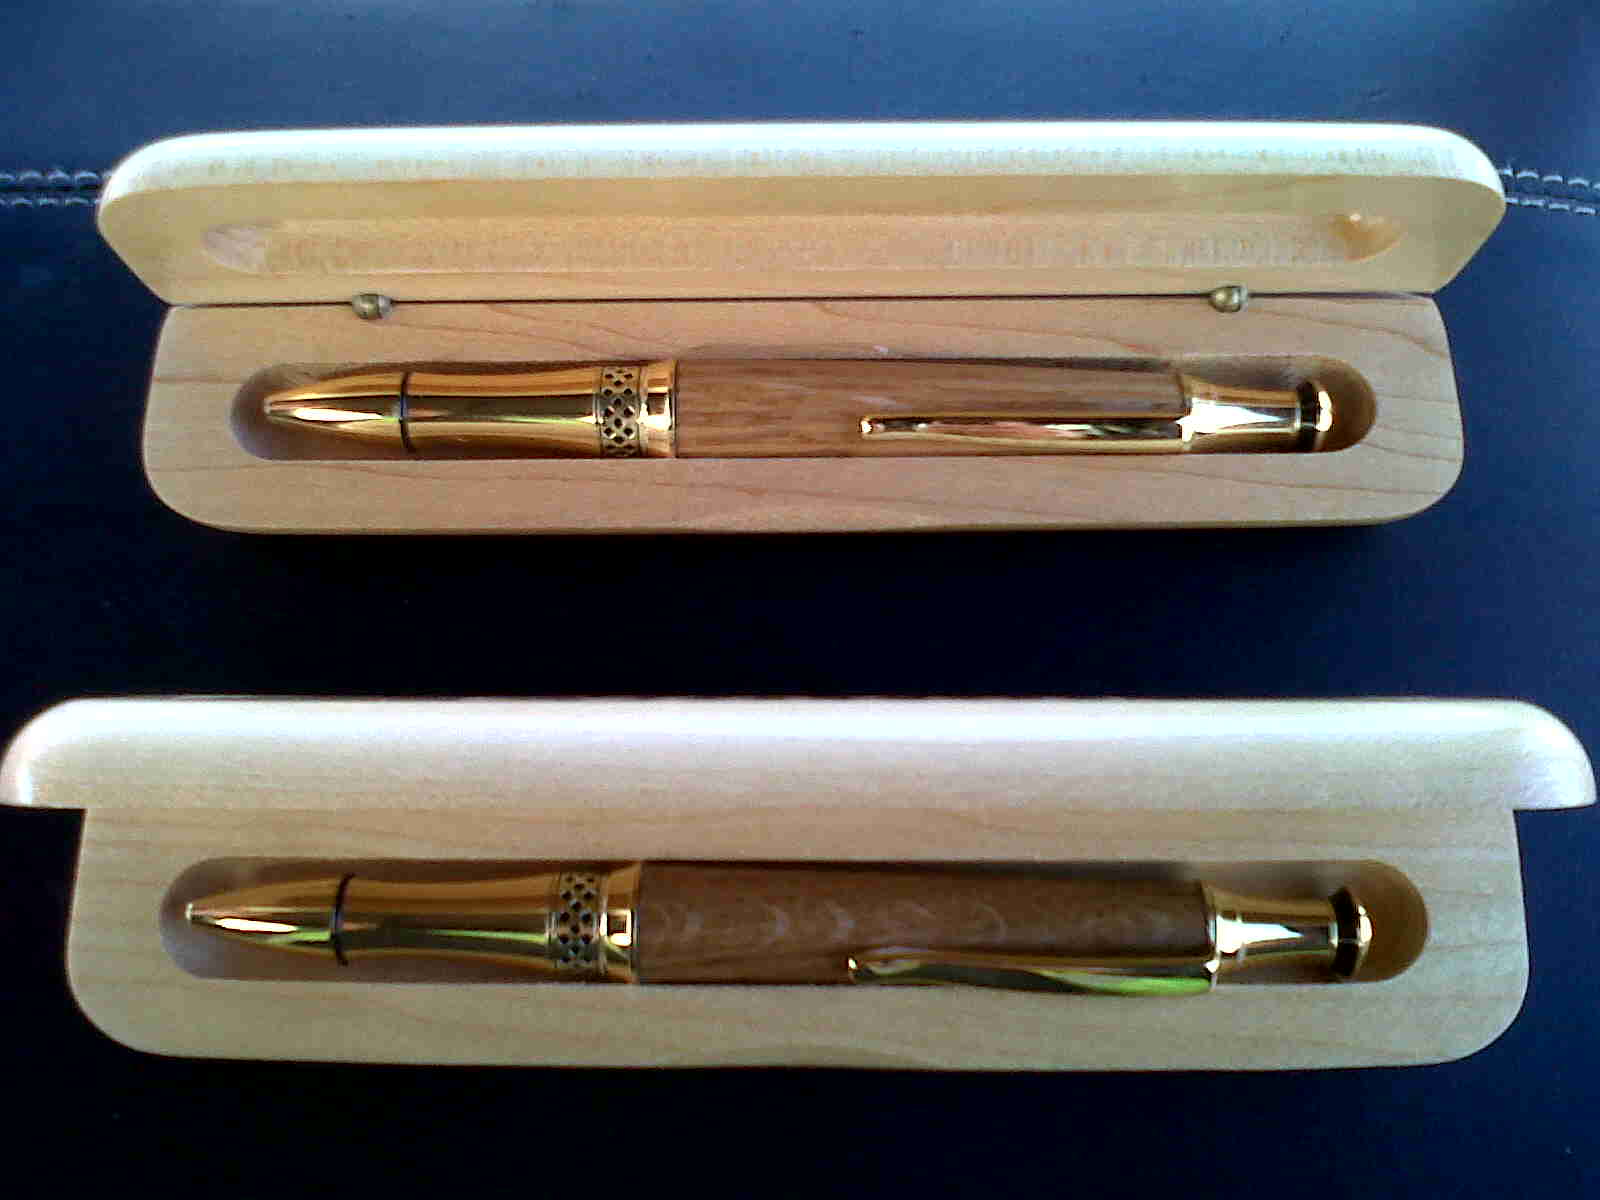 2 Phoenix pens